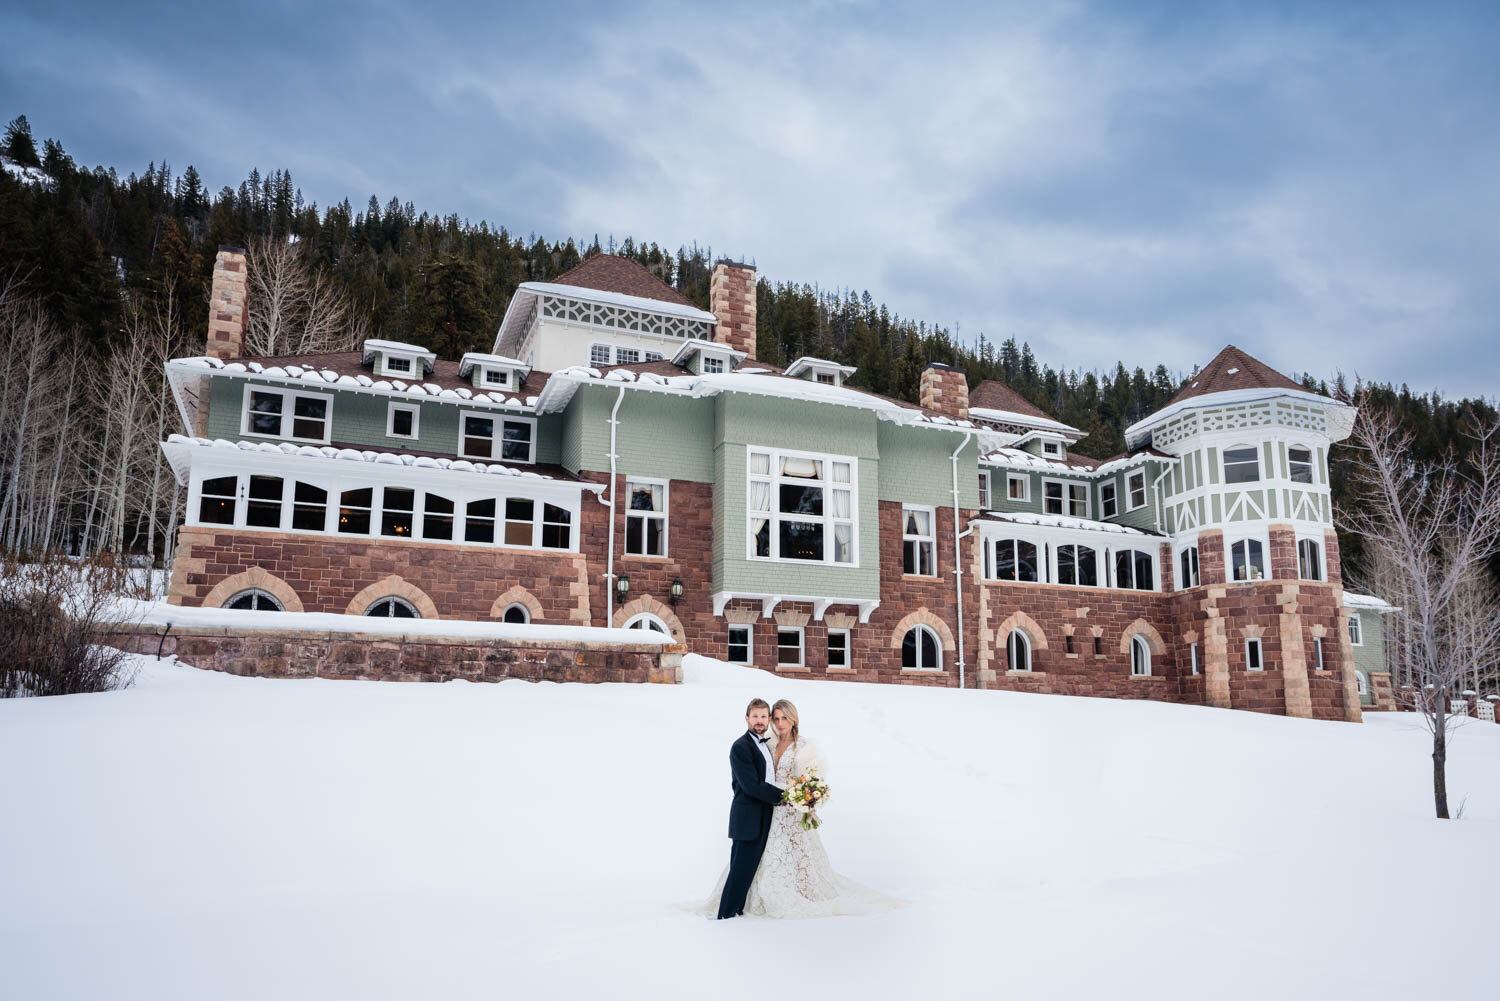  Redstone Castle Styled Wedding by Aspen Colorado photographer, JMGant Photography 